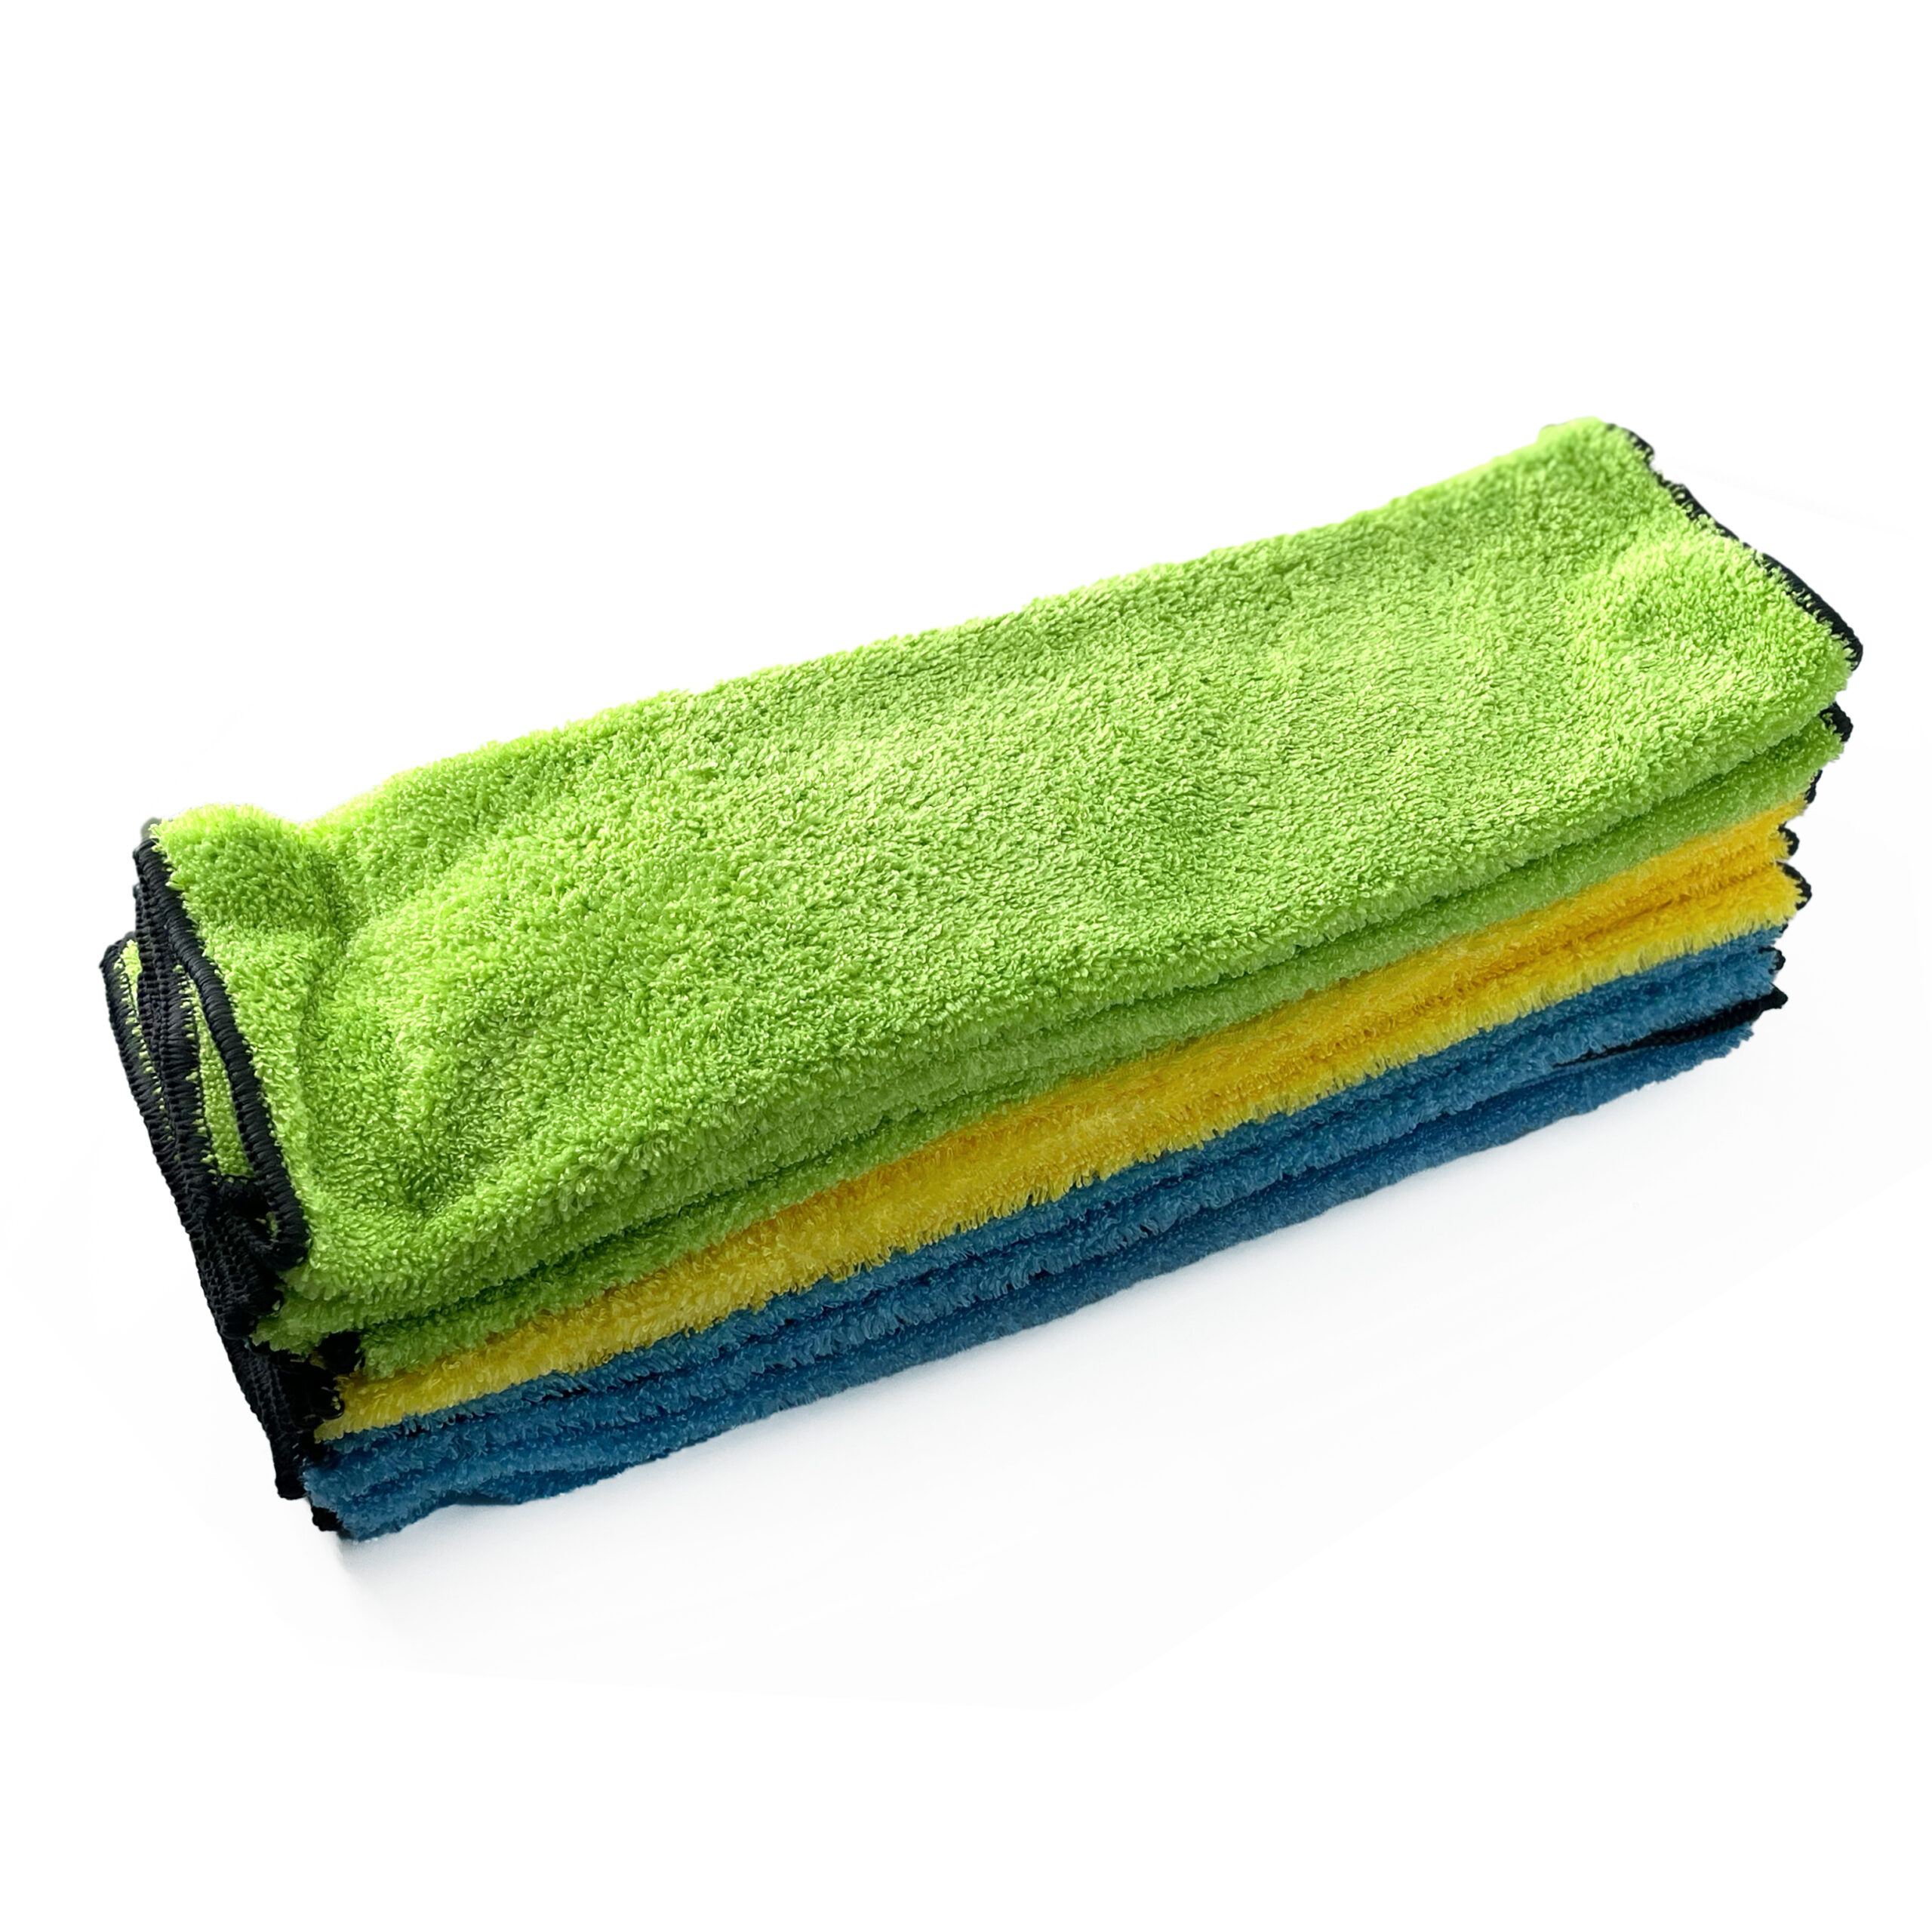 Platinum Series XL Microfiber Cleaning Towels 30 ct Bag